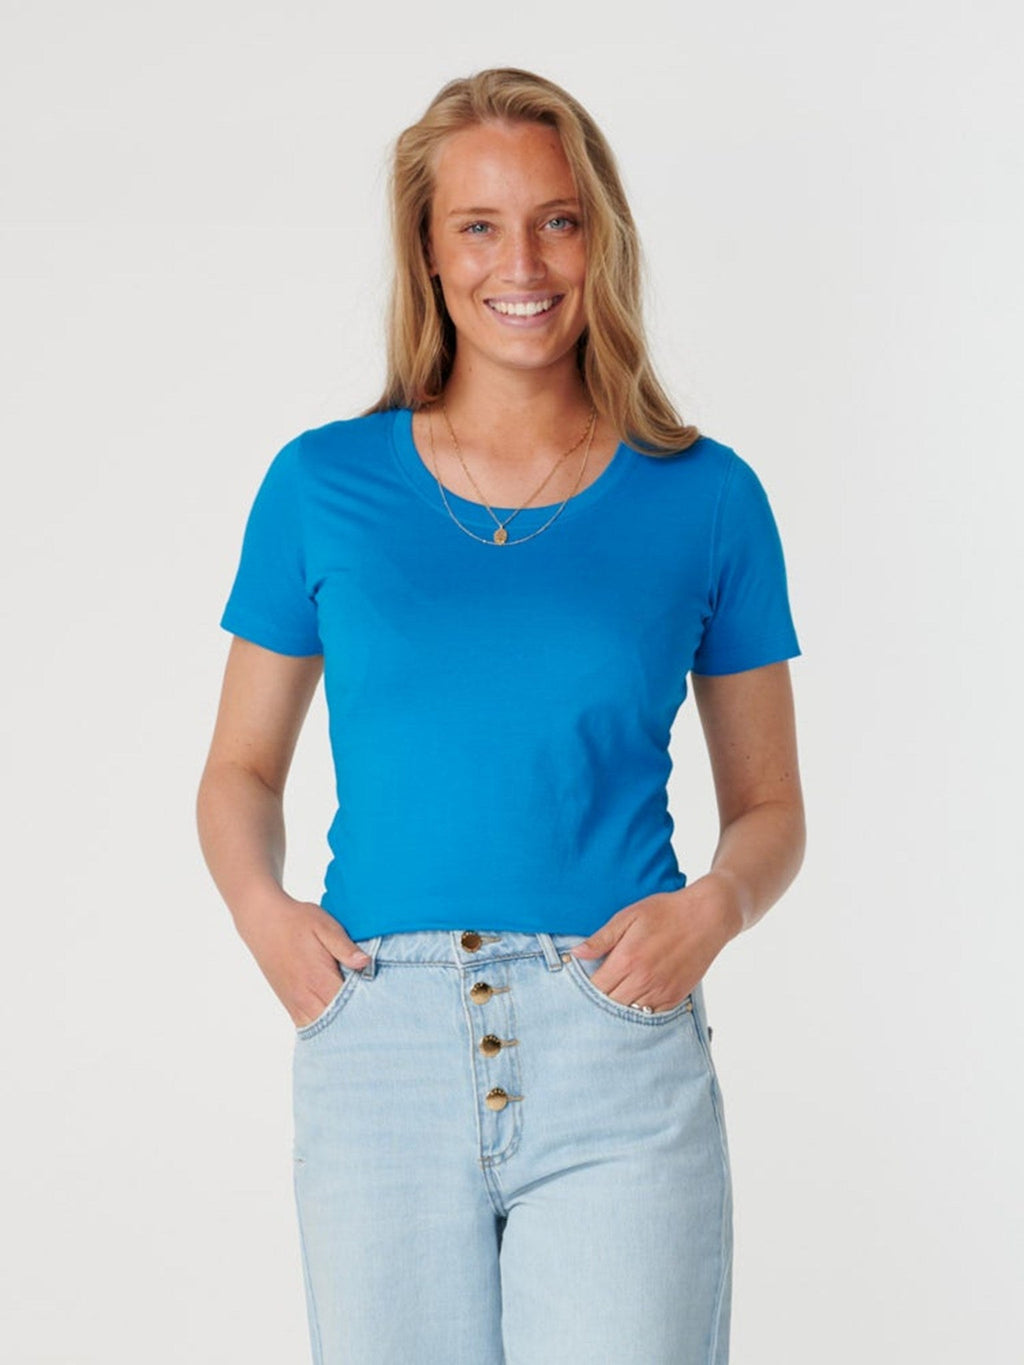 T-shirt ajusté - Bleu torquoise